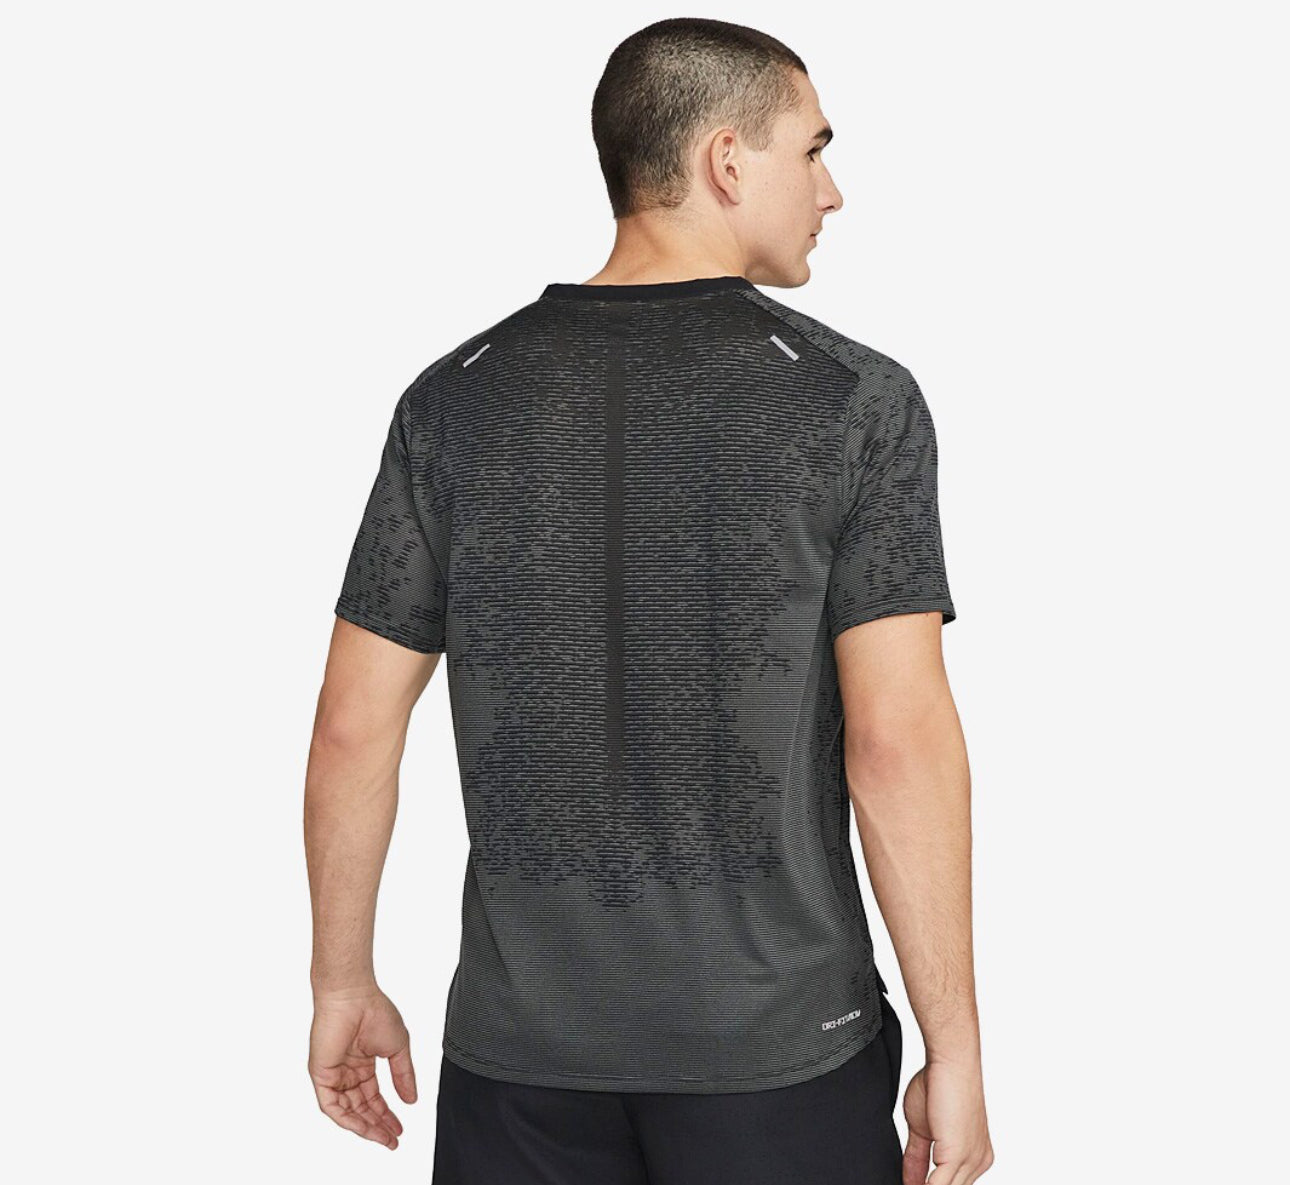 Nike TechKnit Running Division T Shirt